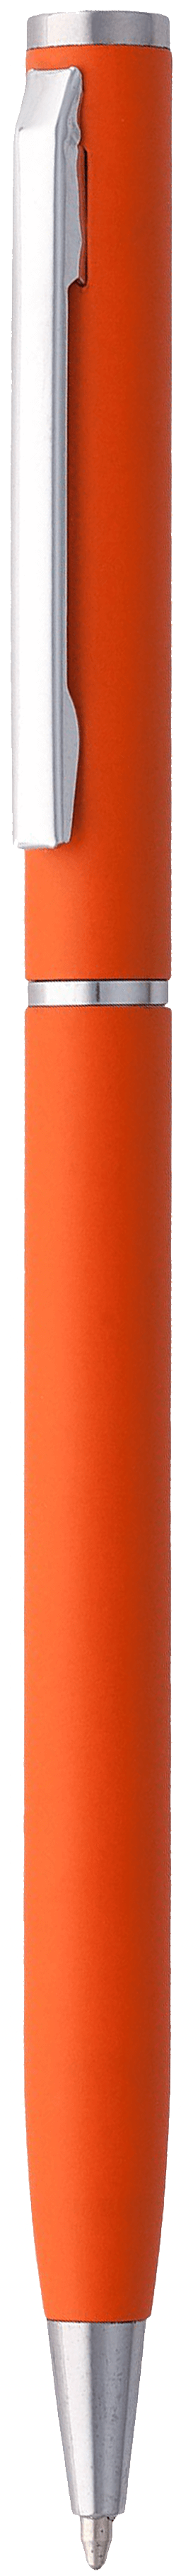 Ручка HILTON (Акция! 36.90 от 300шт.) Оранжевая 1060.05